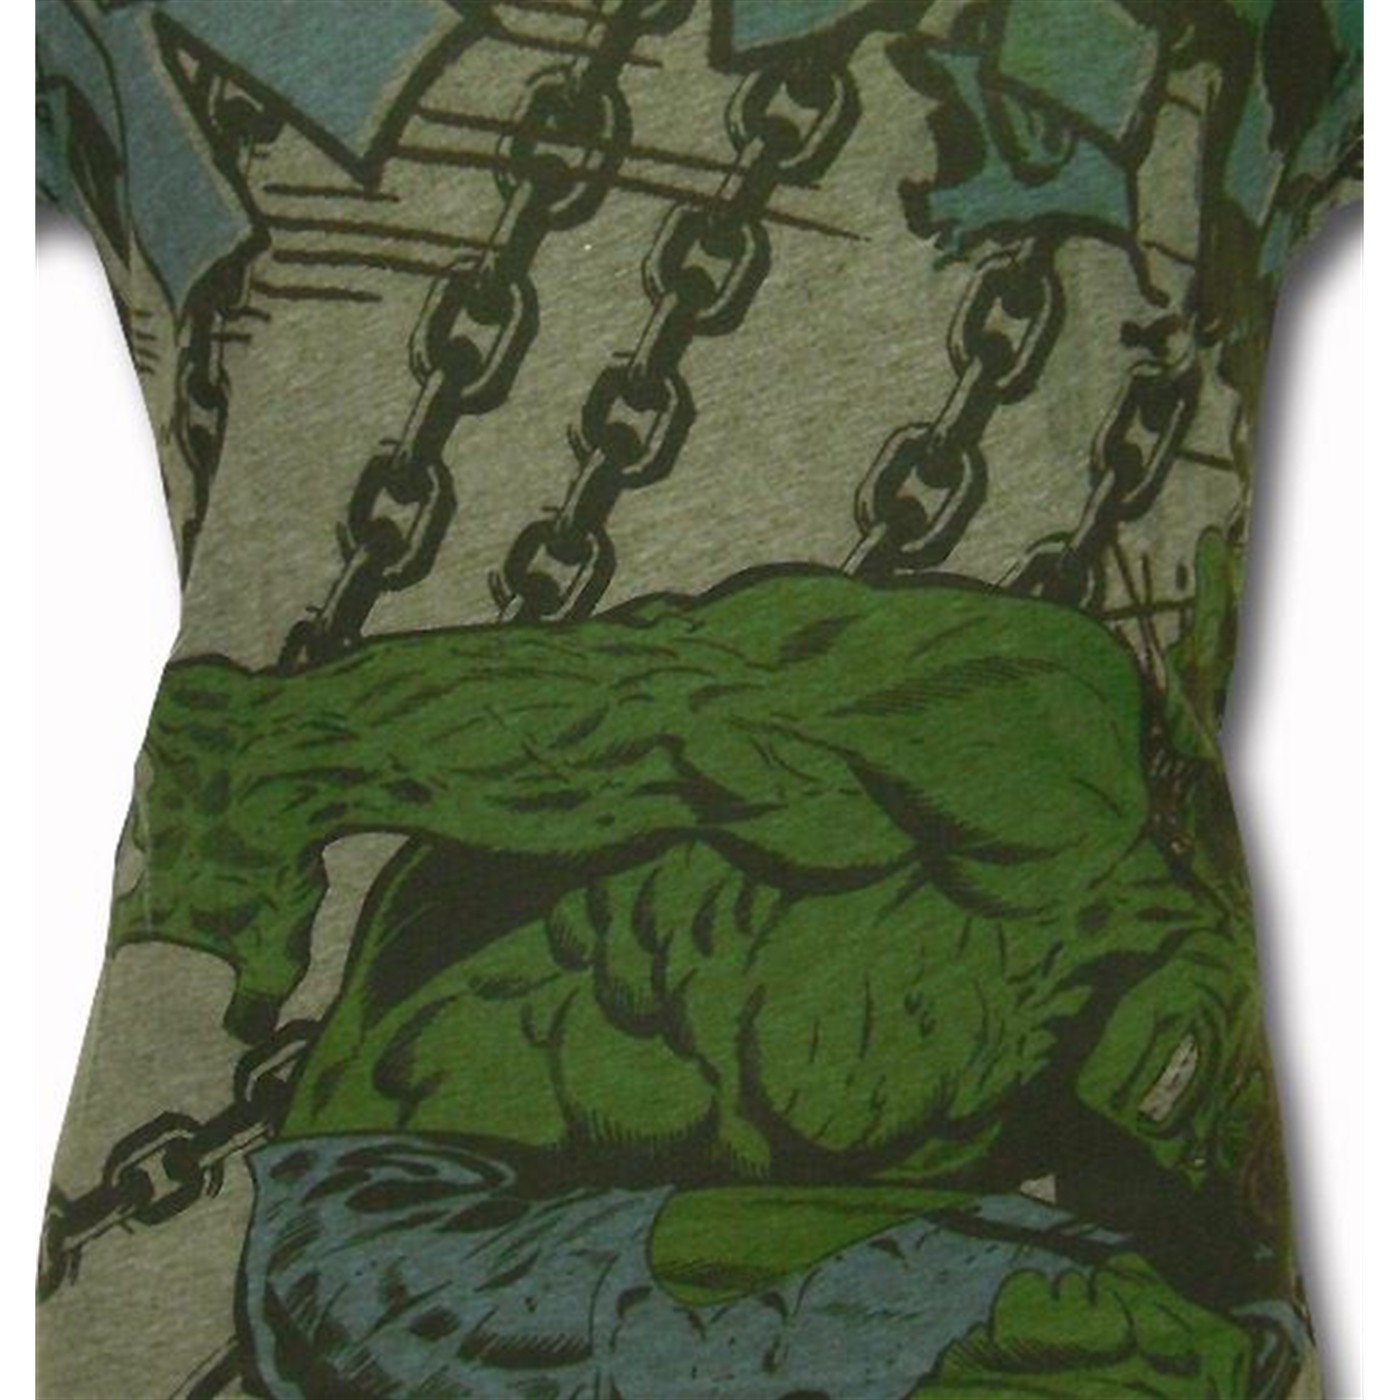 Hulk Heavy Lifting Sublimated T-Shirt